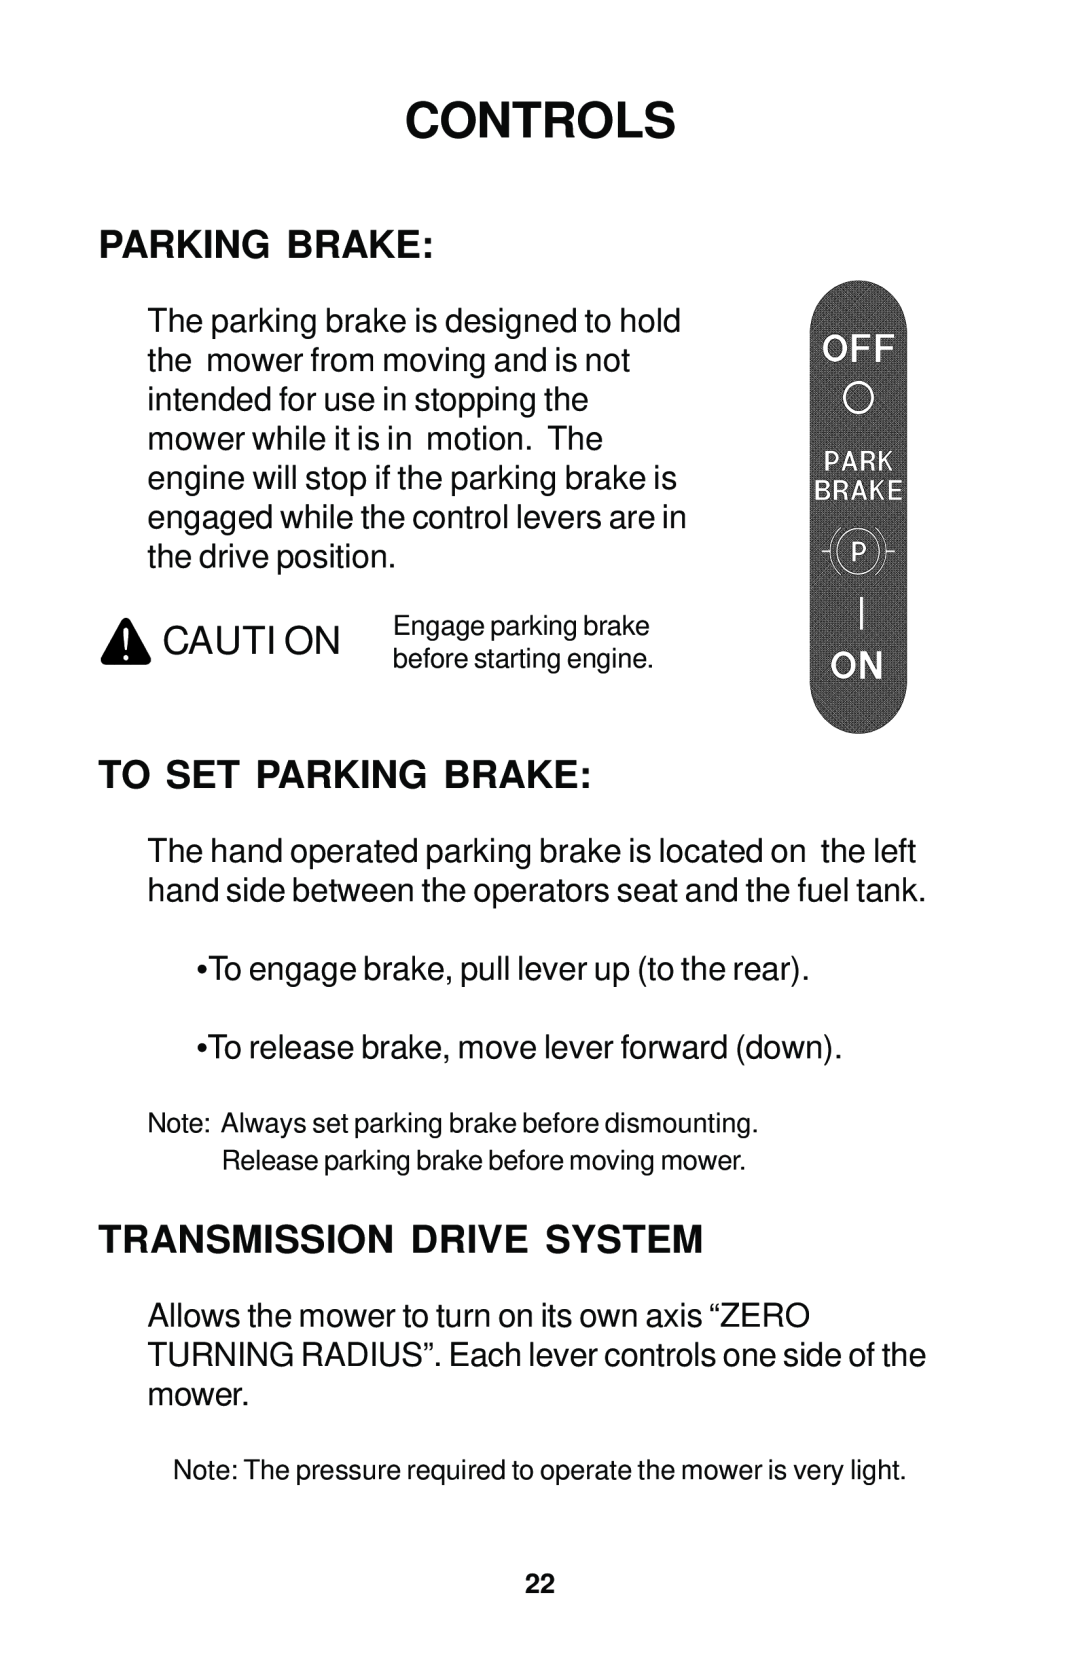 Dixon 17823-0704 manual To Set Parking Brake, Transmission Drive System, Controls 